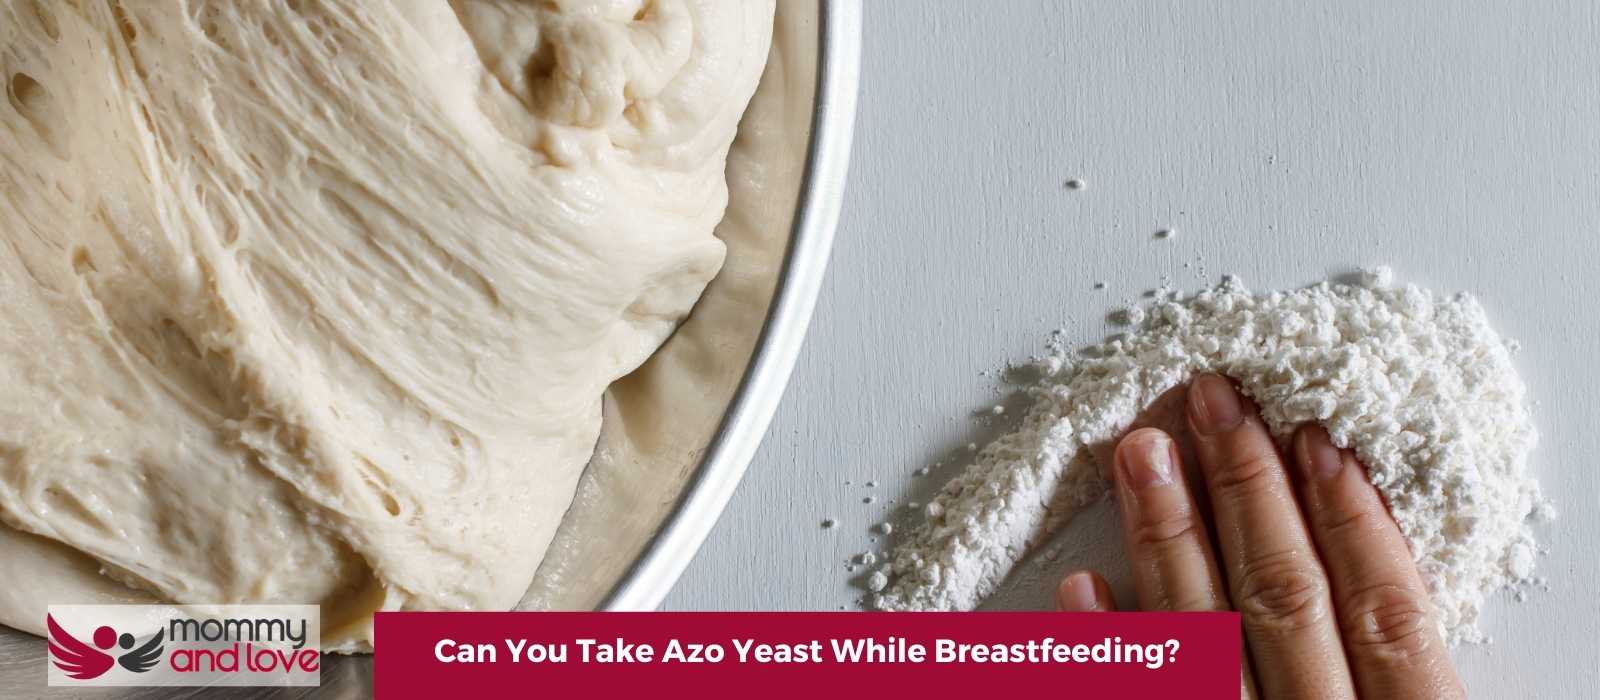 Can You Take Azo Yeast While Breastfeeding